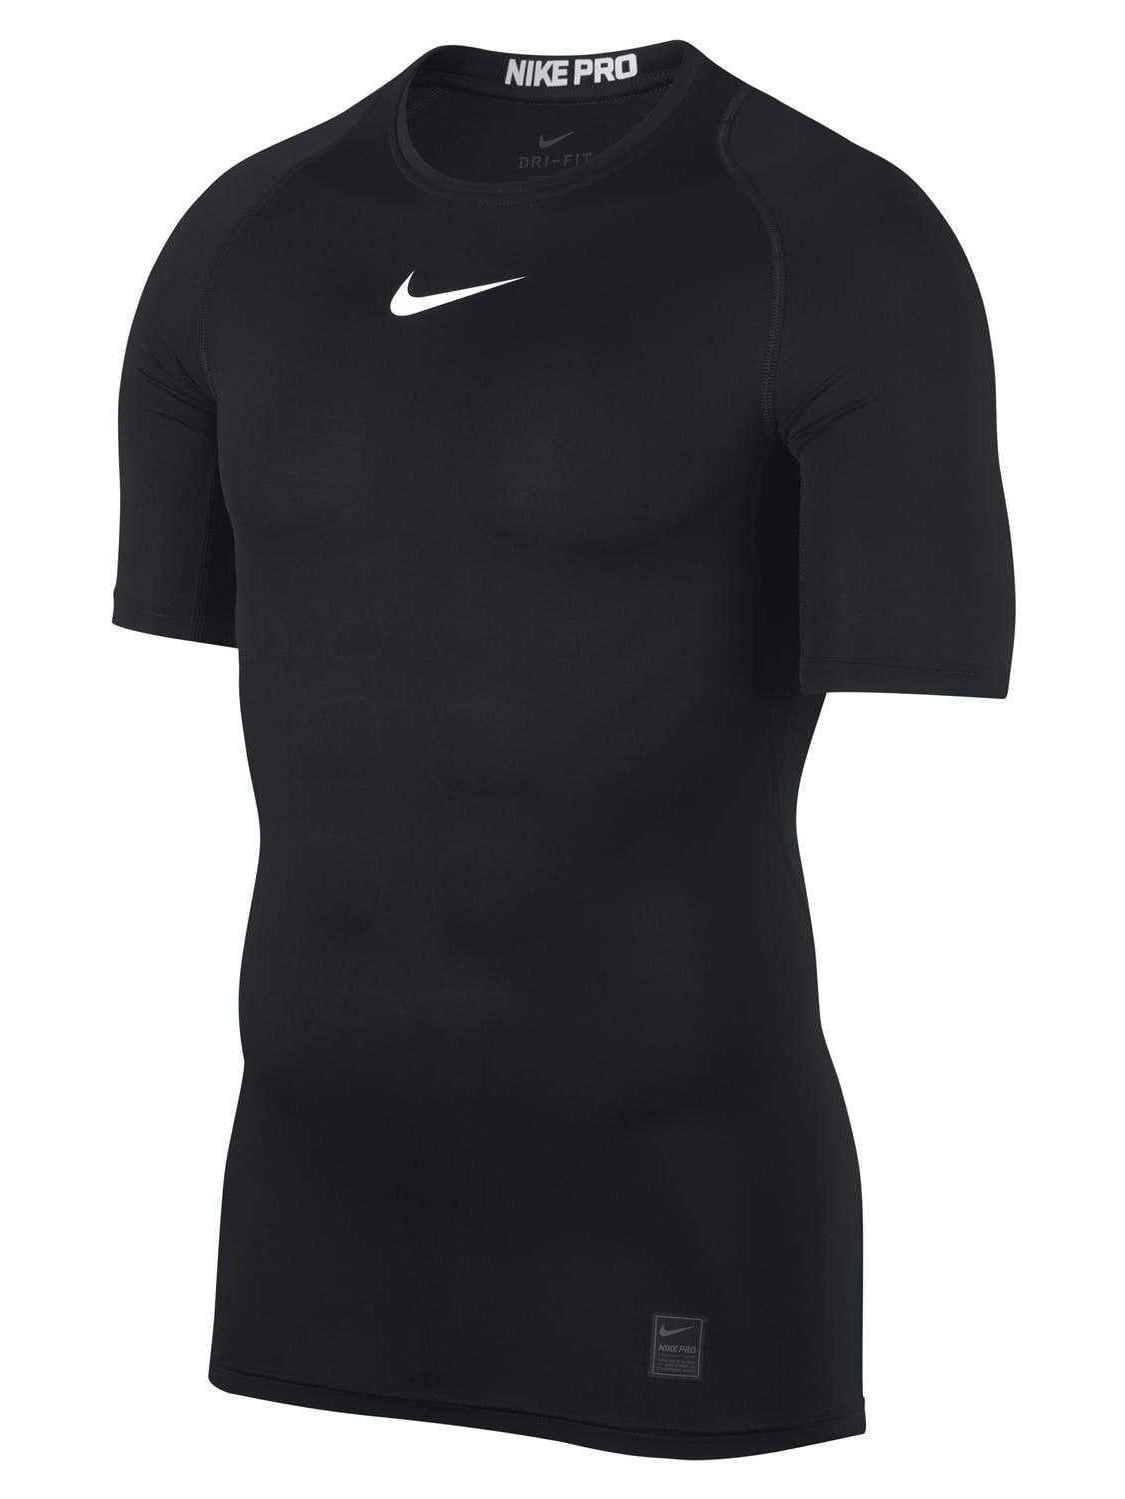 Nike Men's Pro Compression Short Sleeve Top 838091-010 Black - Walmart.com